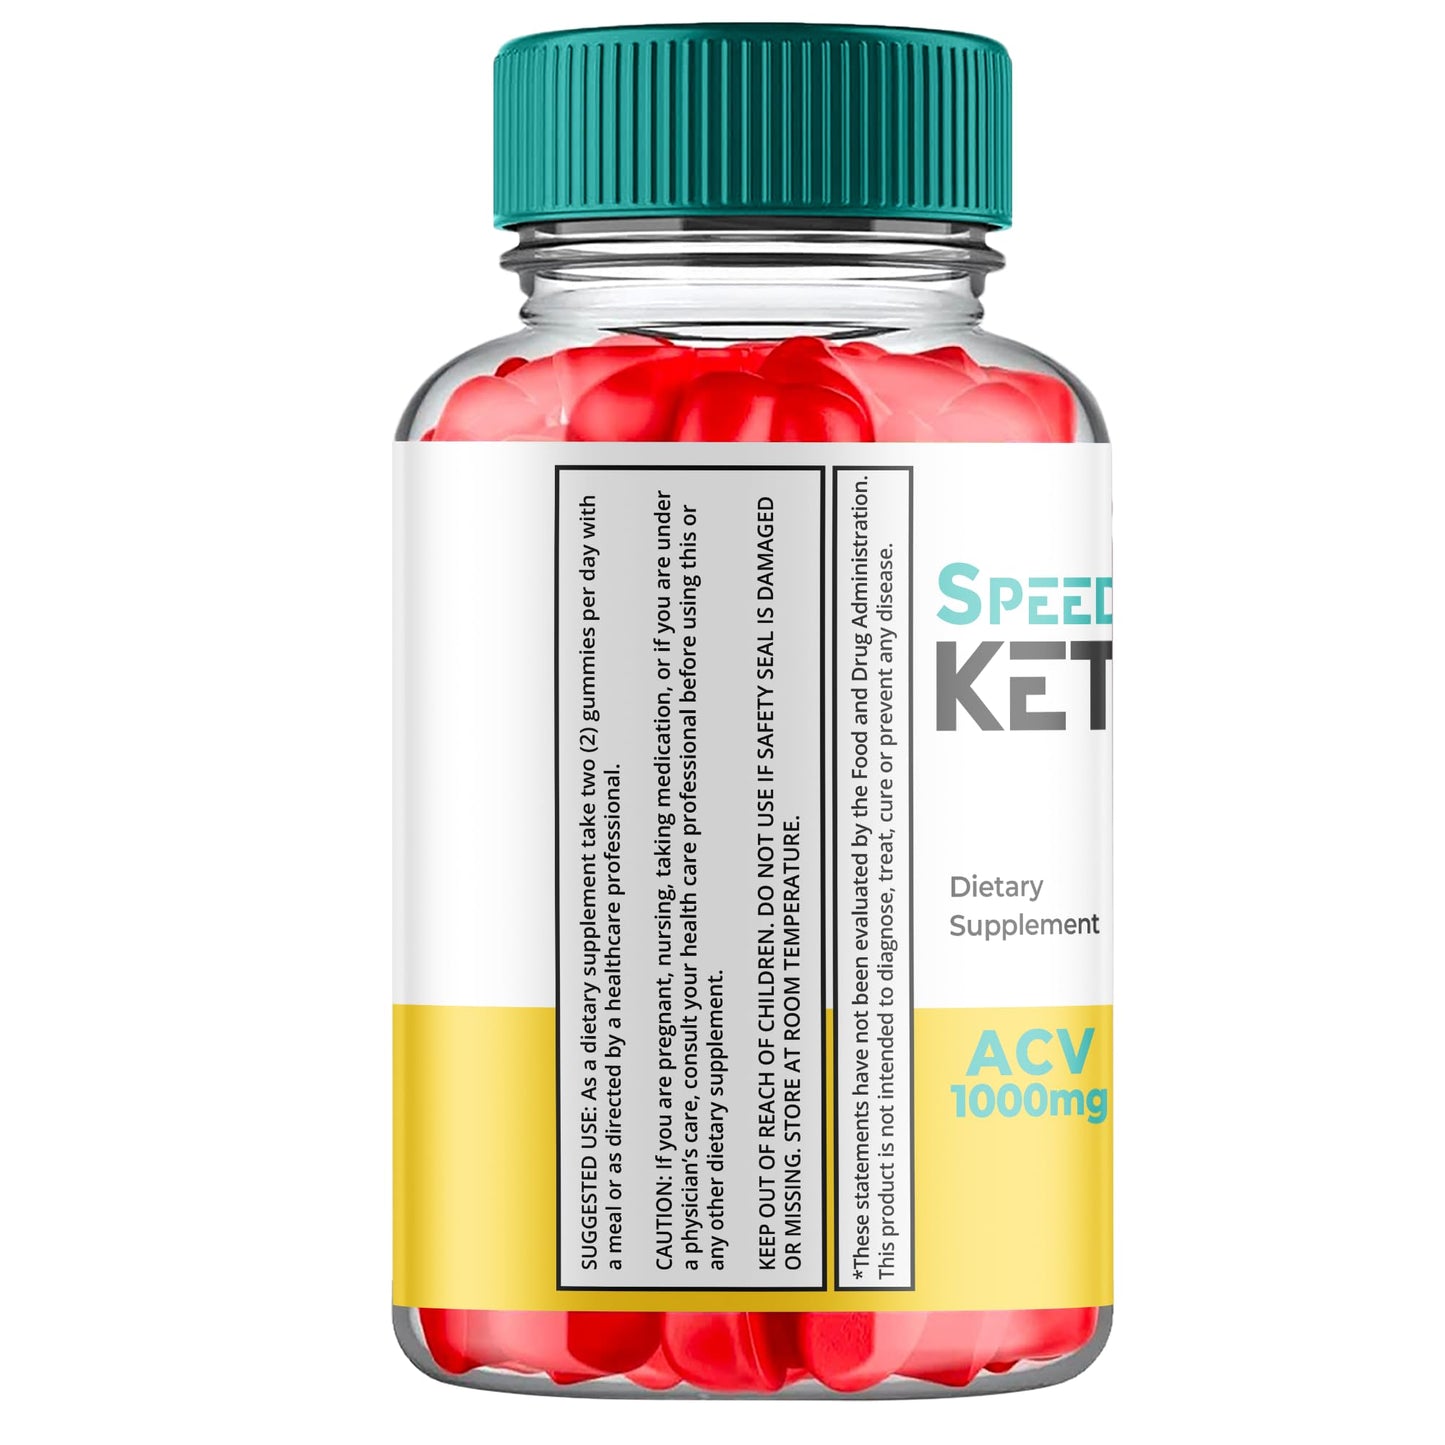 (2 Pack) Speedy Keto ACV Gummies Advanced Weight Loss, Speedy Keto ACV Gummies